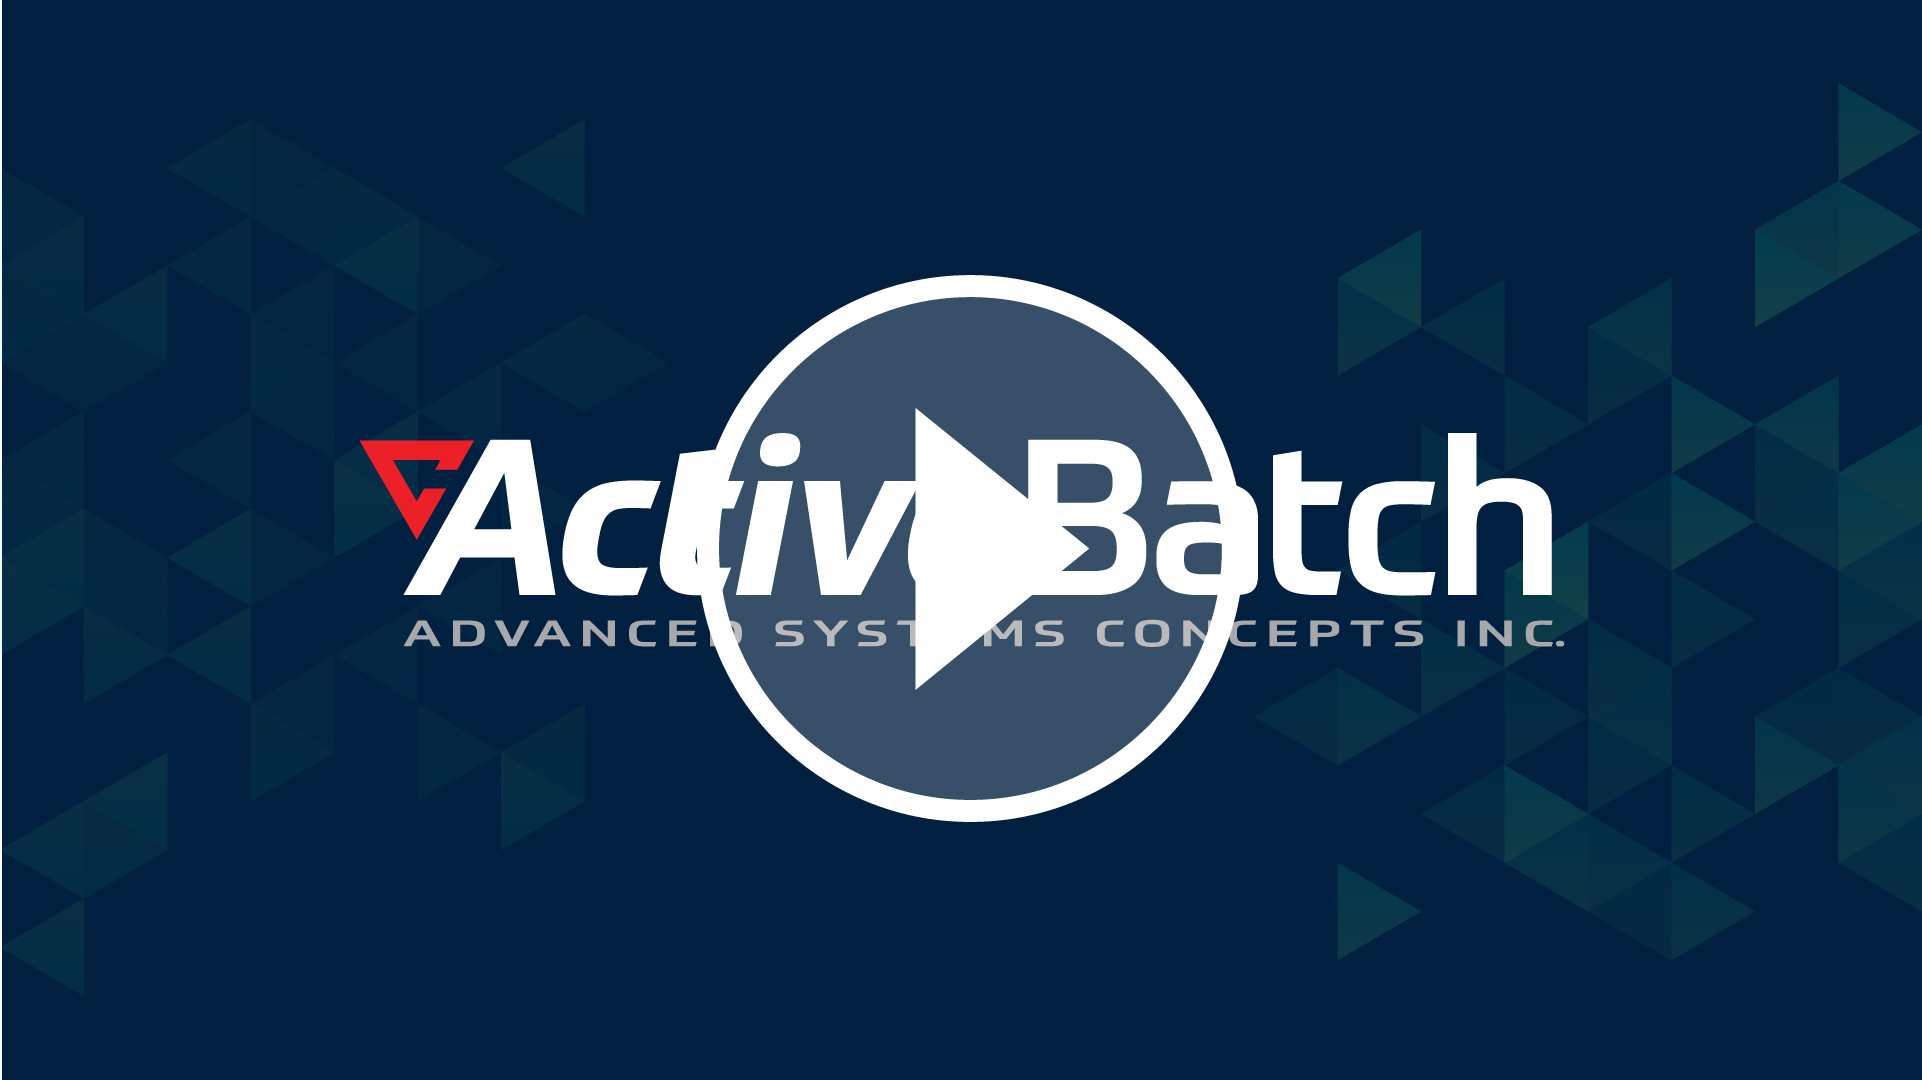 ActiveBatch Overview Video